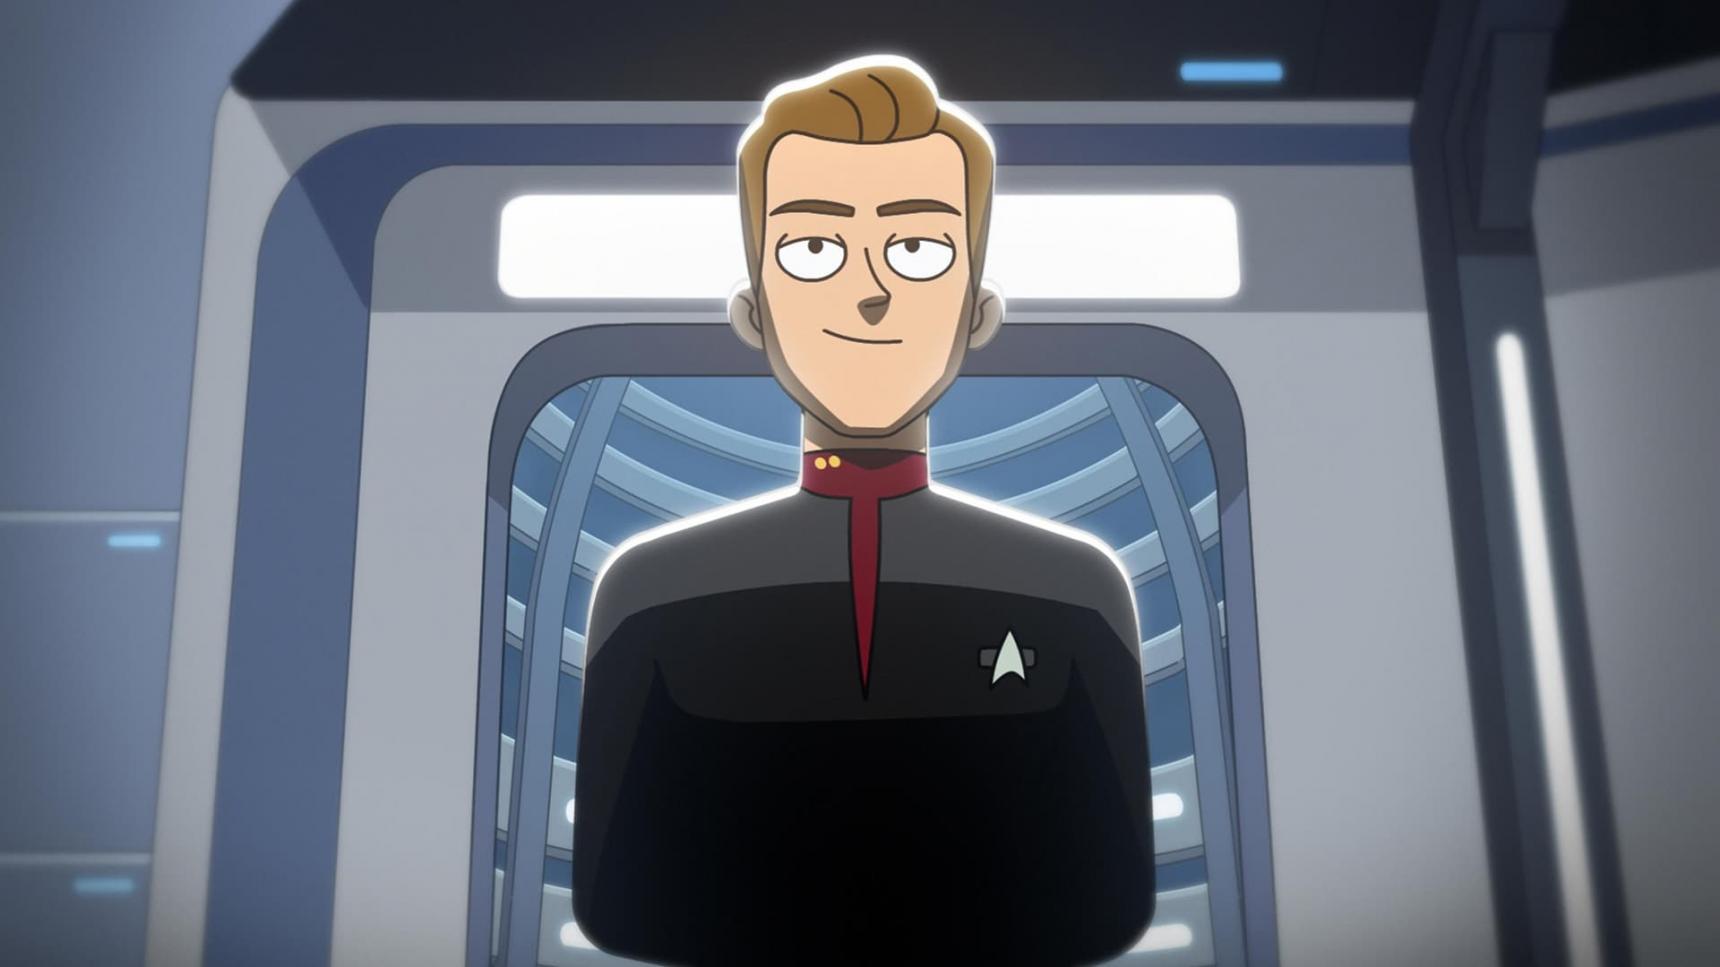 Poster del episodio 3 de Star Trek: Lower Decks online